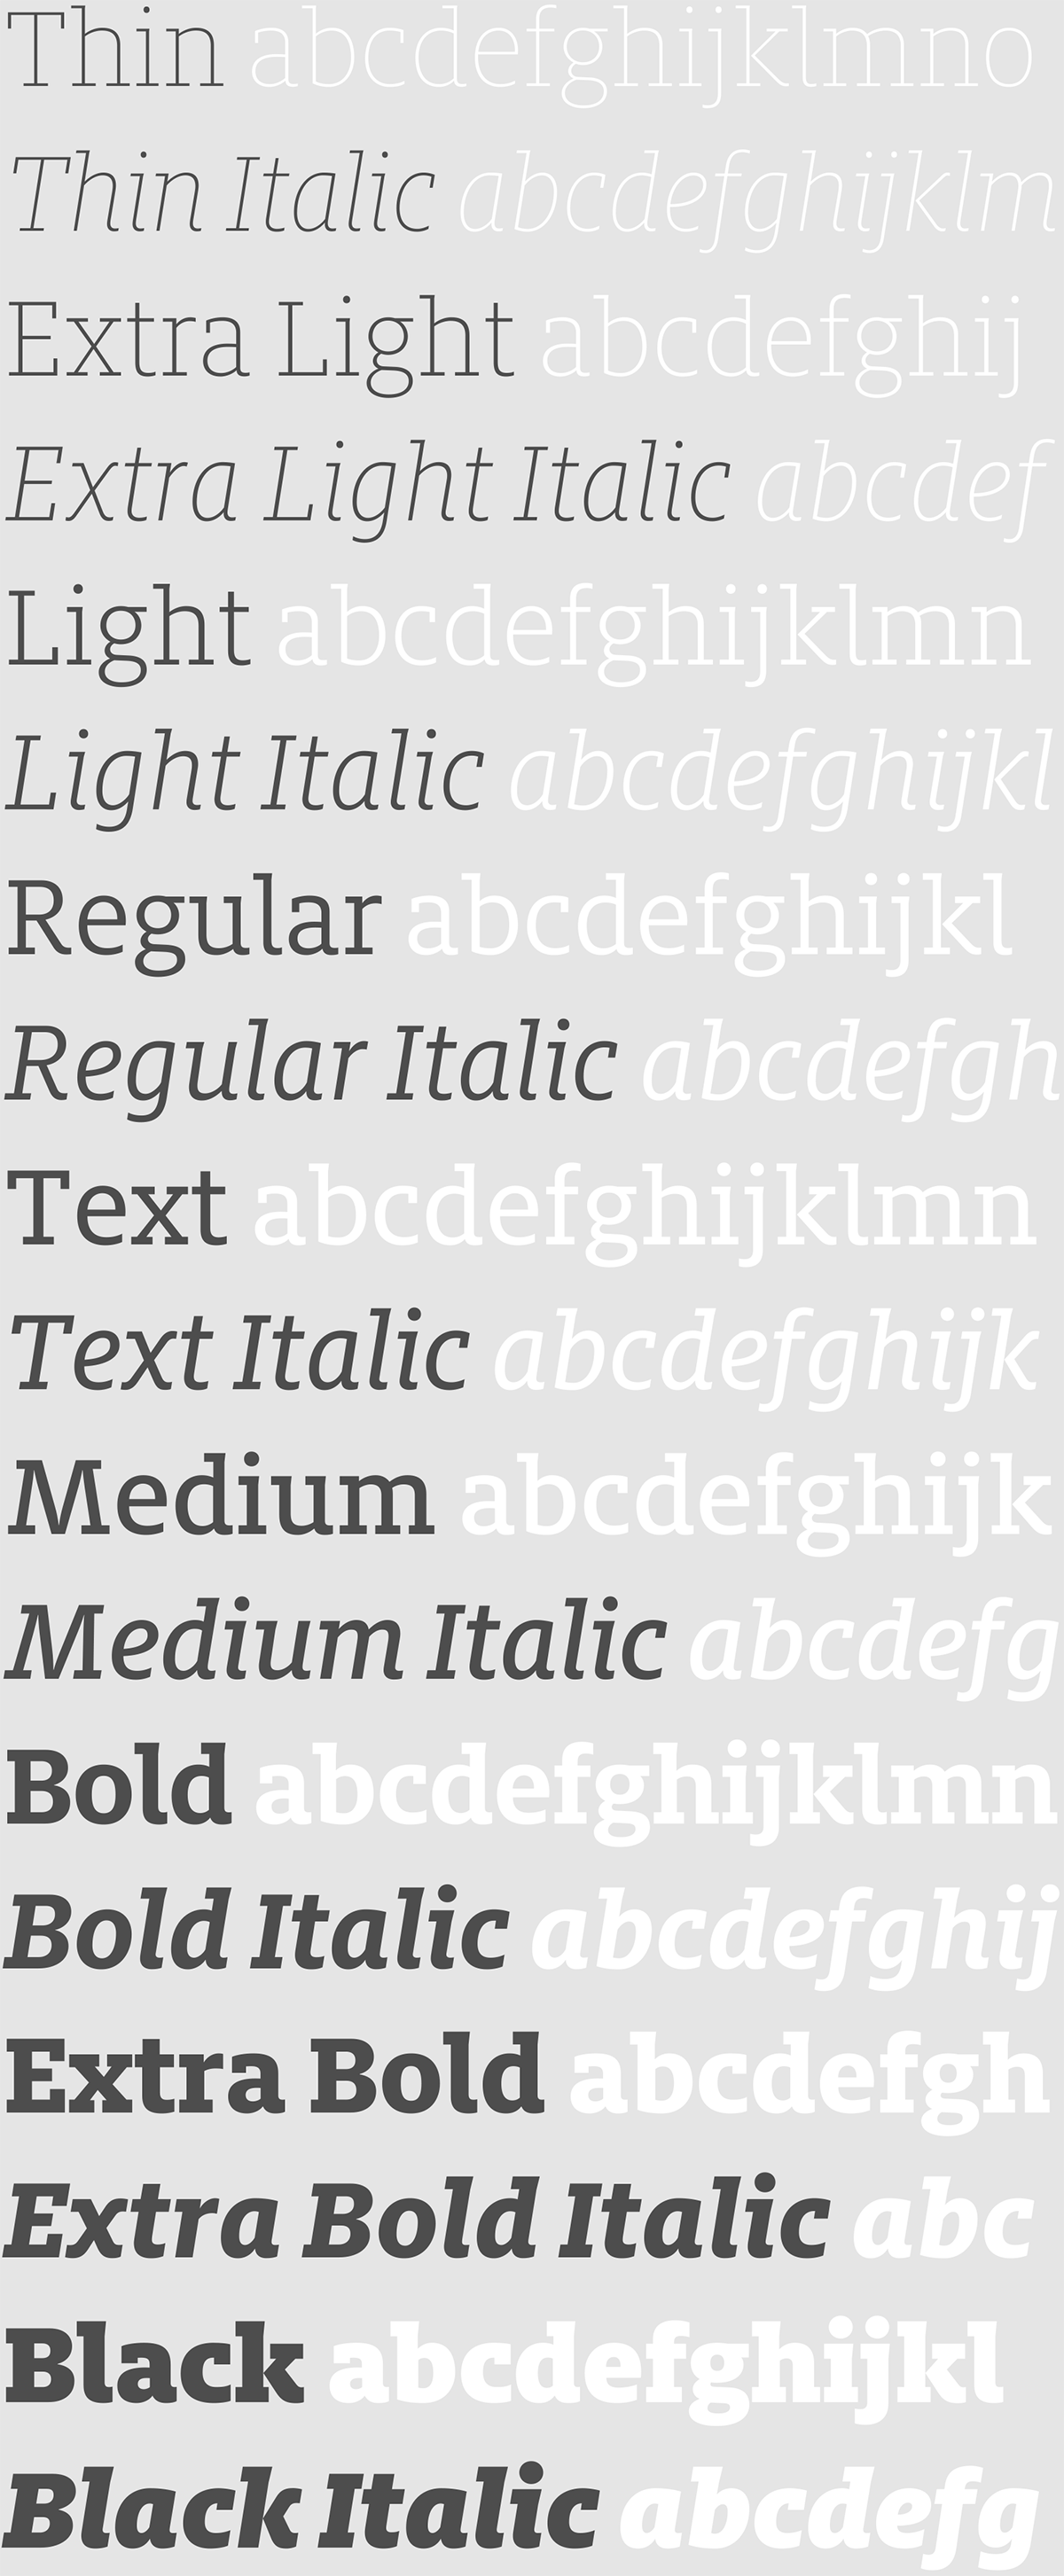 ff FontFont font type Typeface Mike Abbink Milo milo slab slab Superfamily